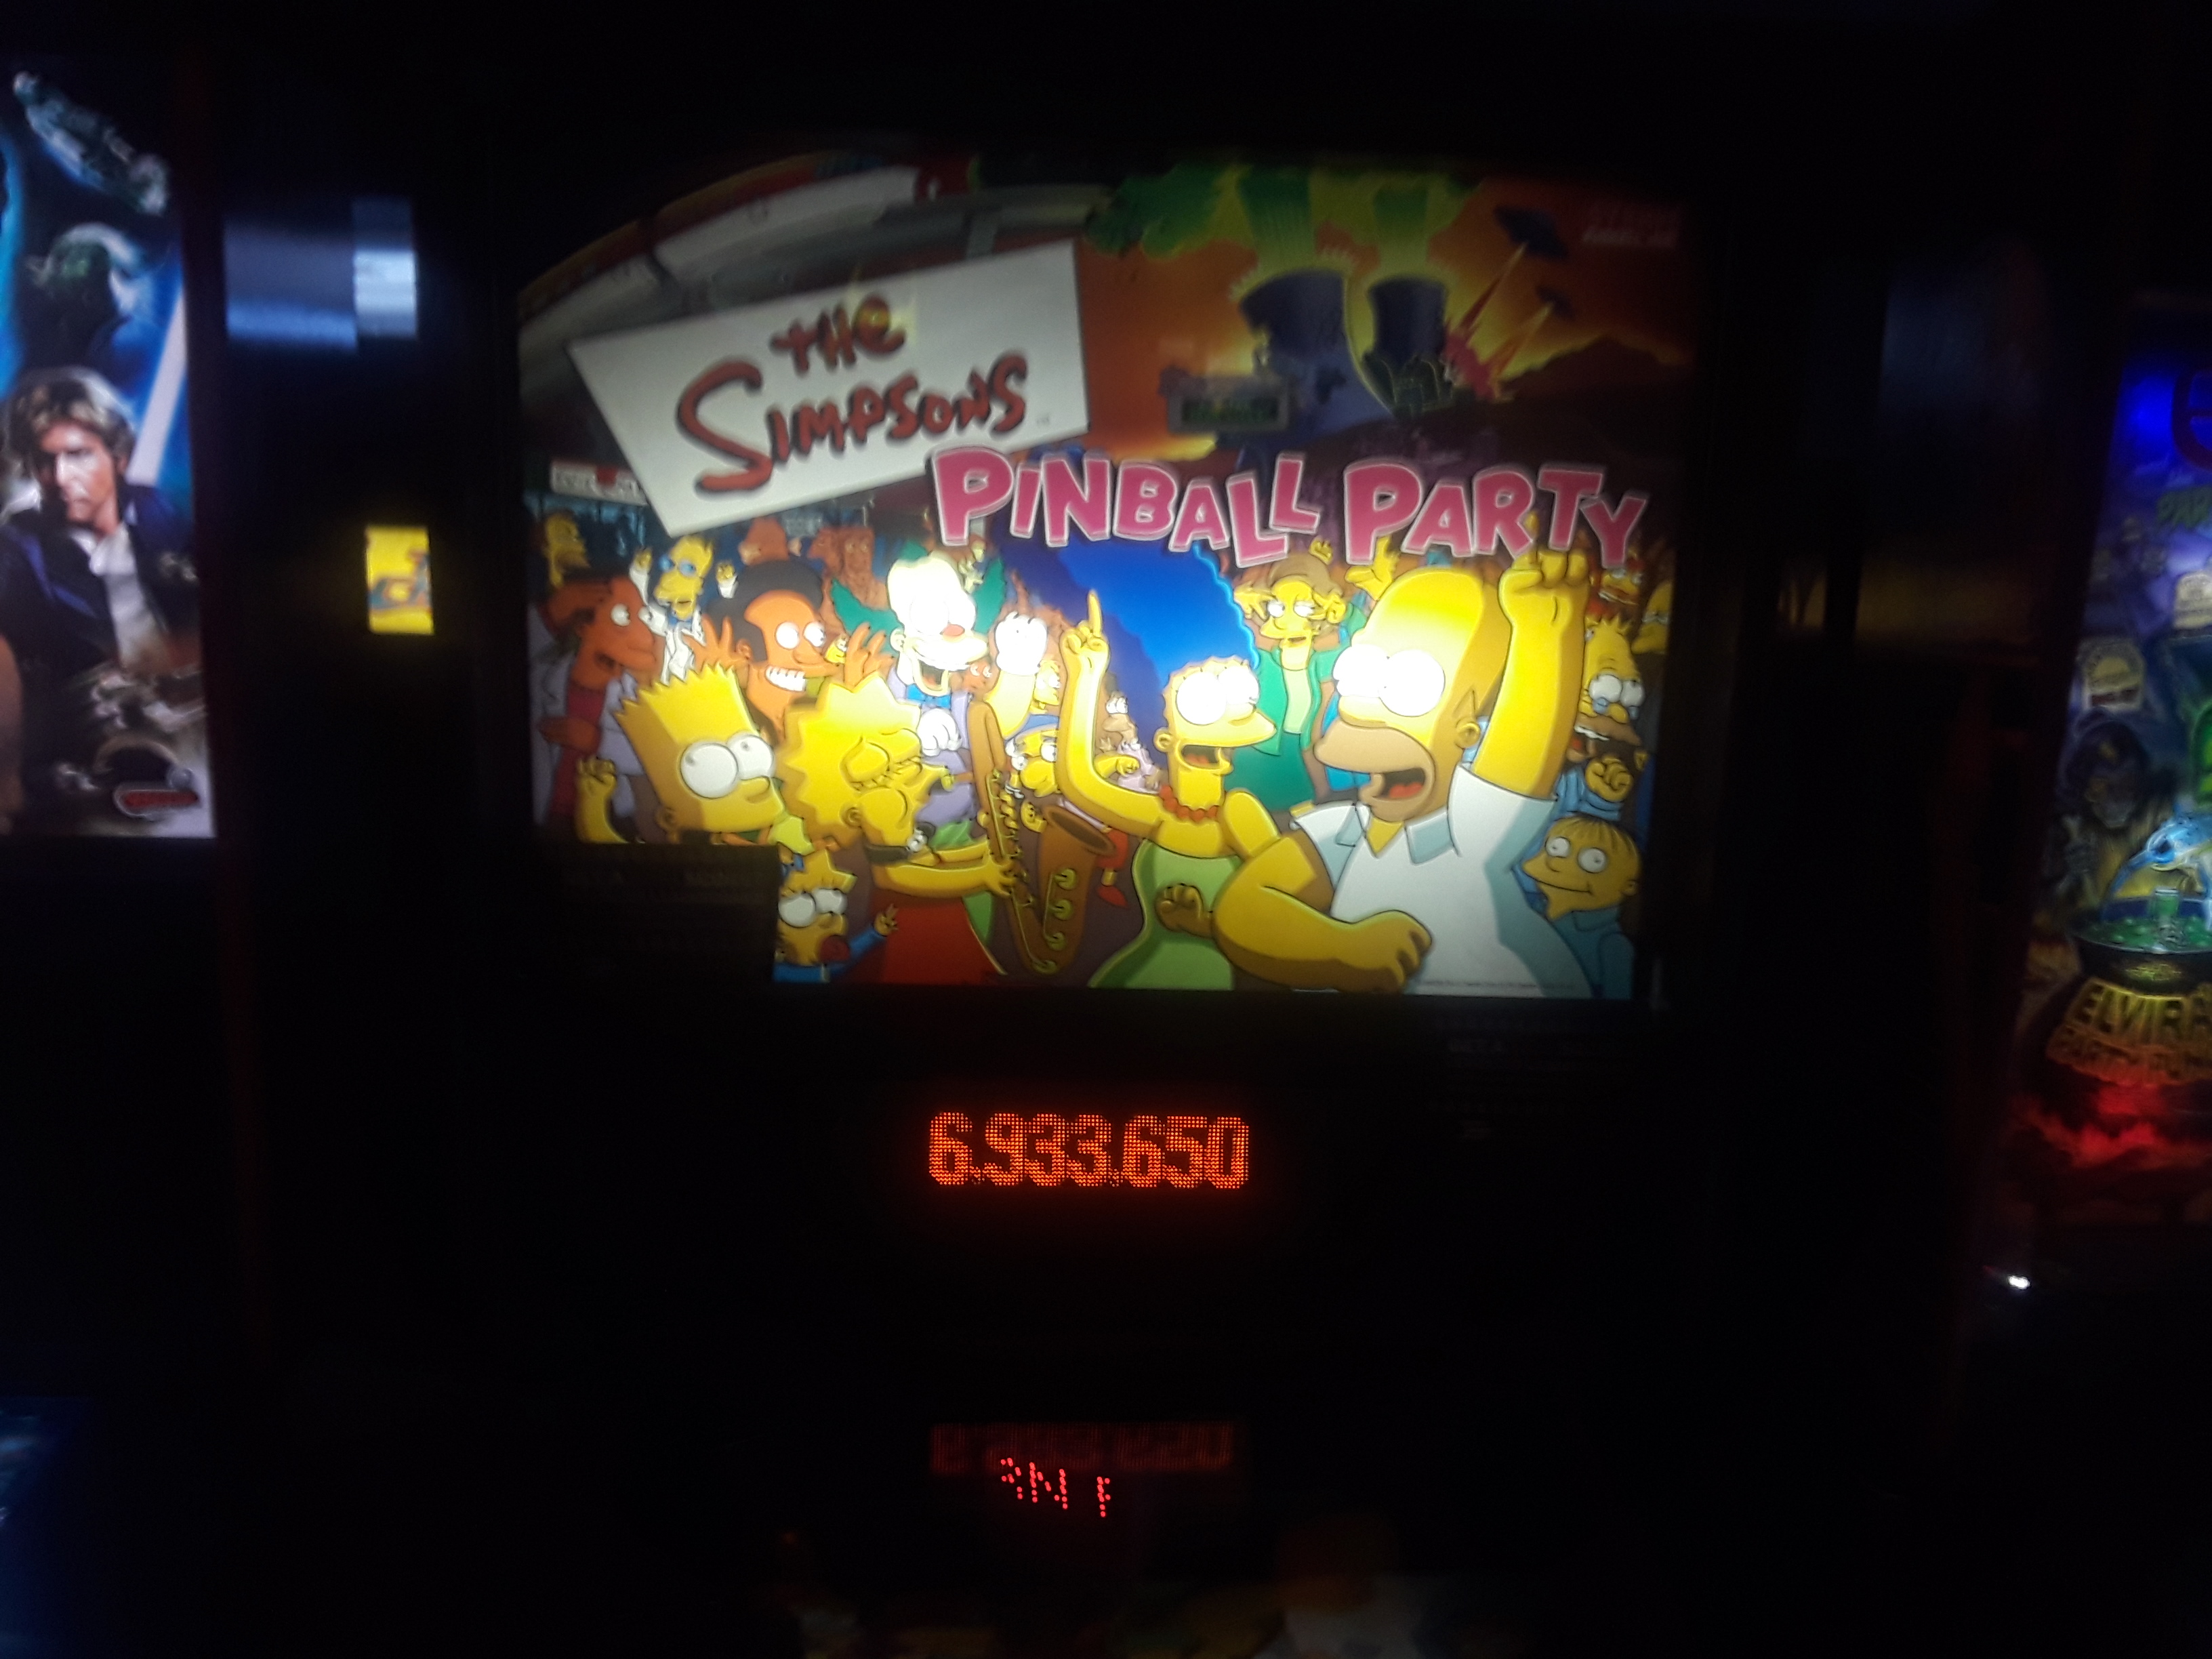 JML101582: The Simpsons Pinball Party (Pinball: 3 Balls) 6,933,650 points on 2019-01-11 13:17:39